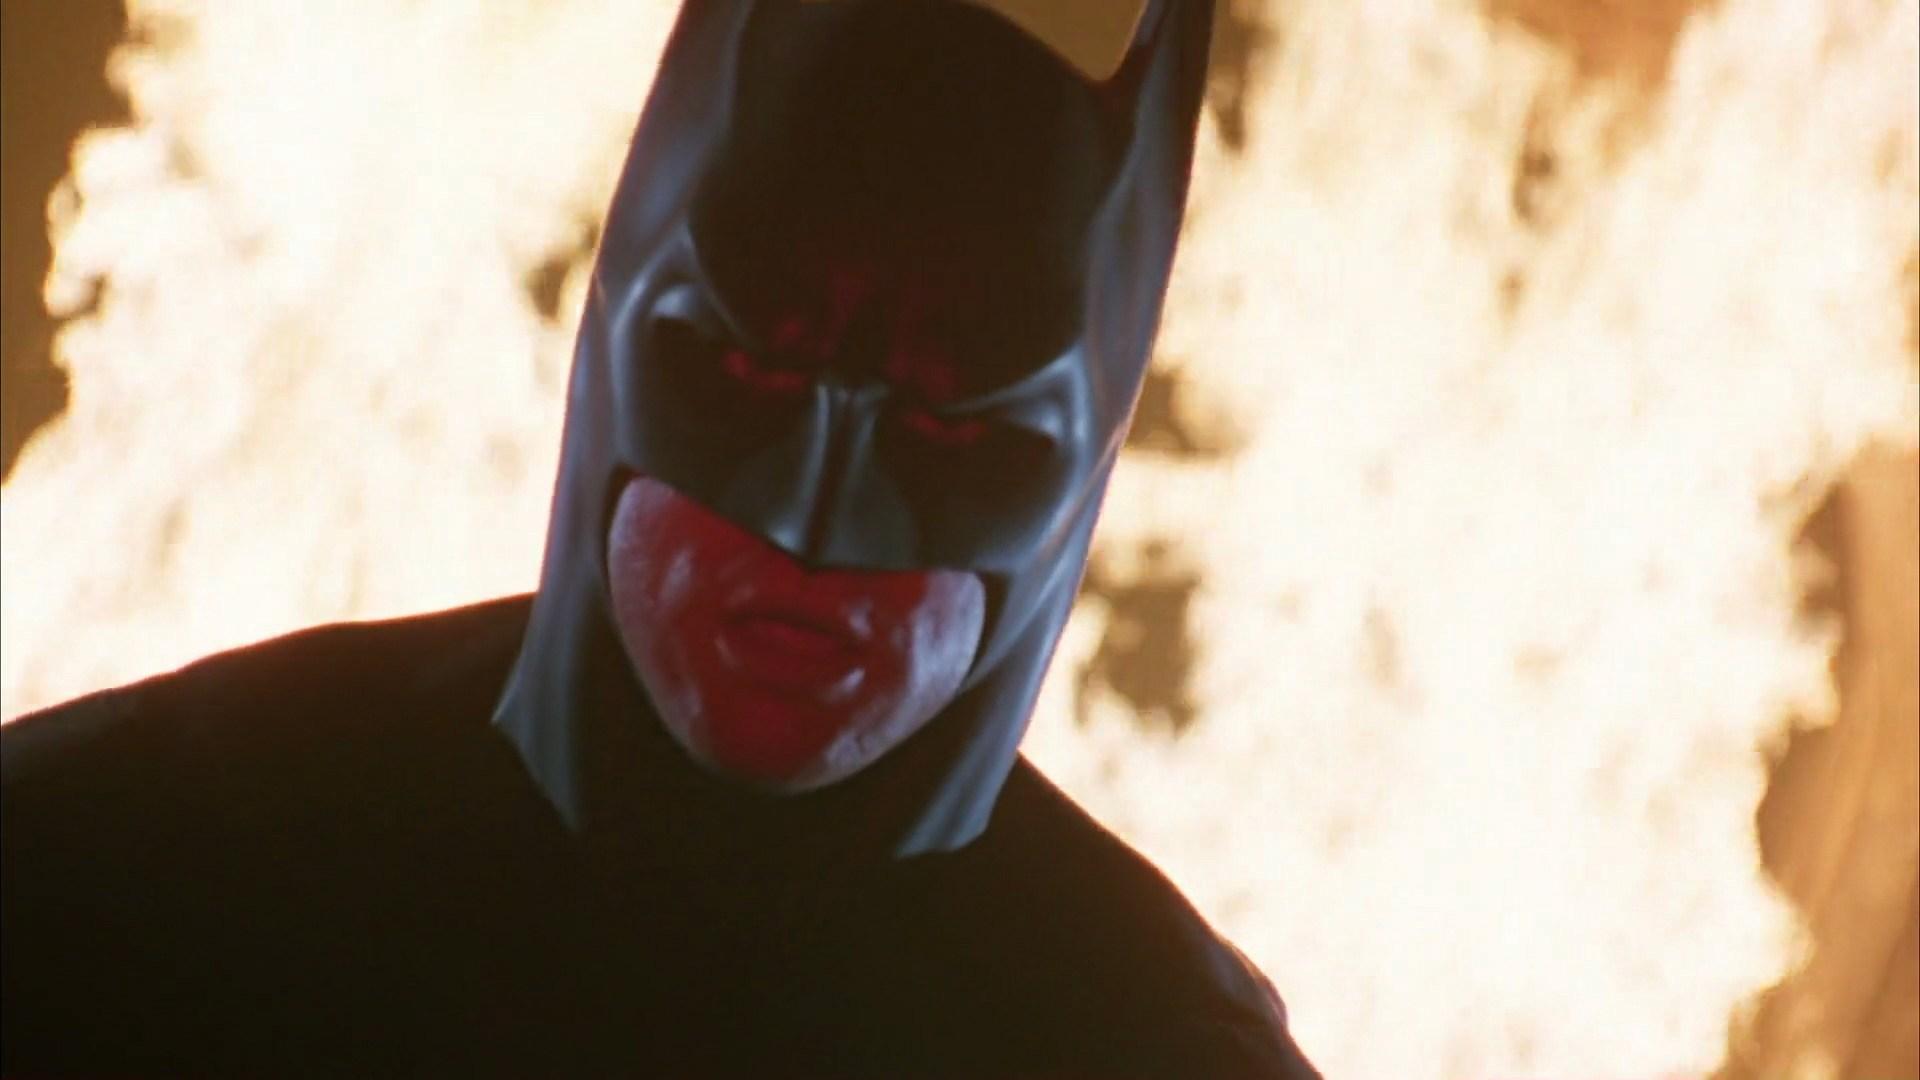 batman-forever-movie-screencaps.com-9393.jpg.3fdc26d1ca442f355bdfed64b7199084.jpg